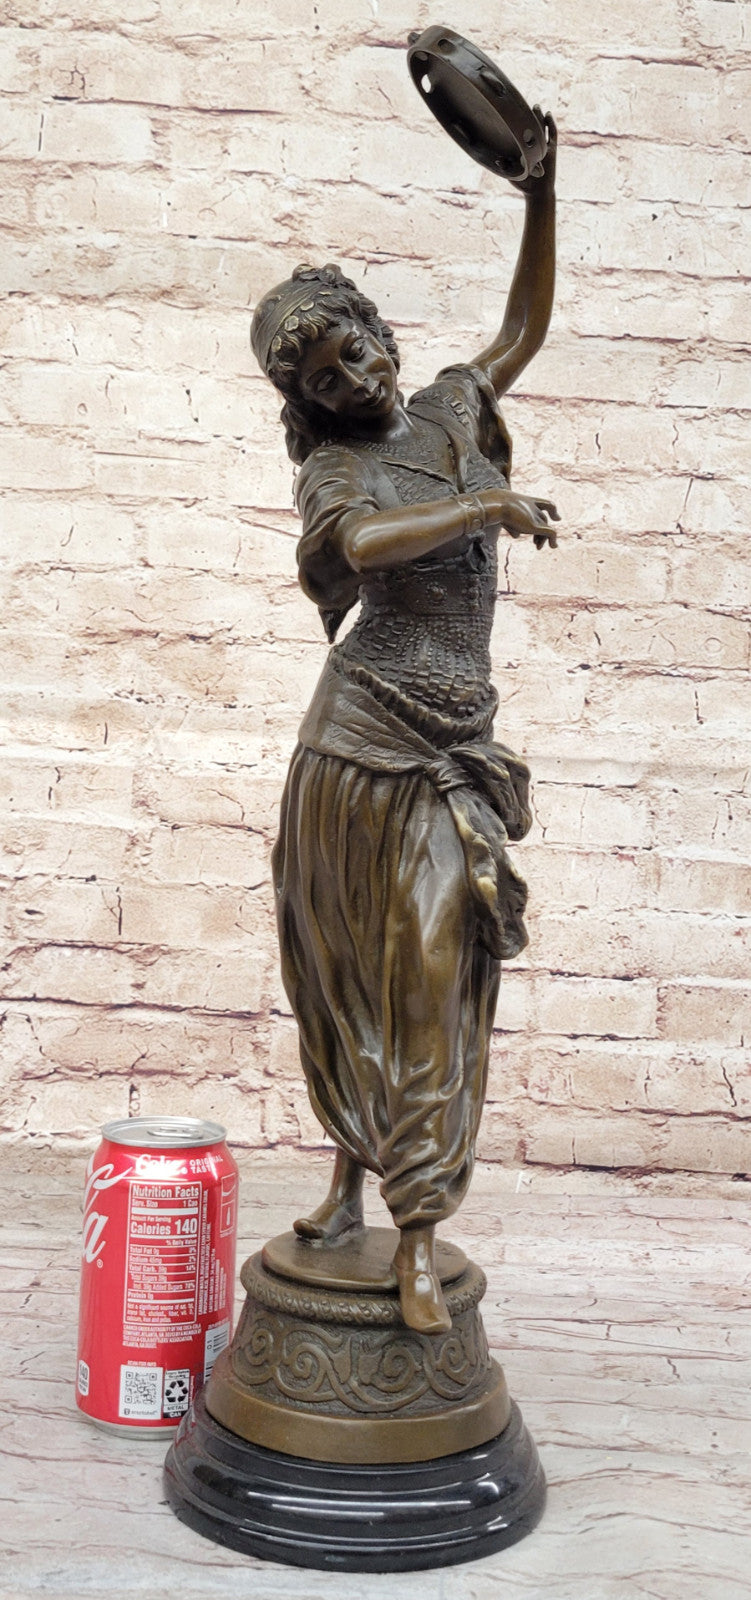 Bouay`s Art Nouveau Style: Handcrafted Bronze Gypsy Dancer Statue Figure